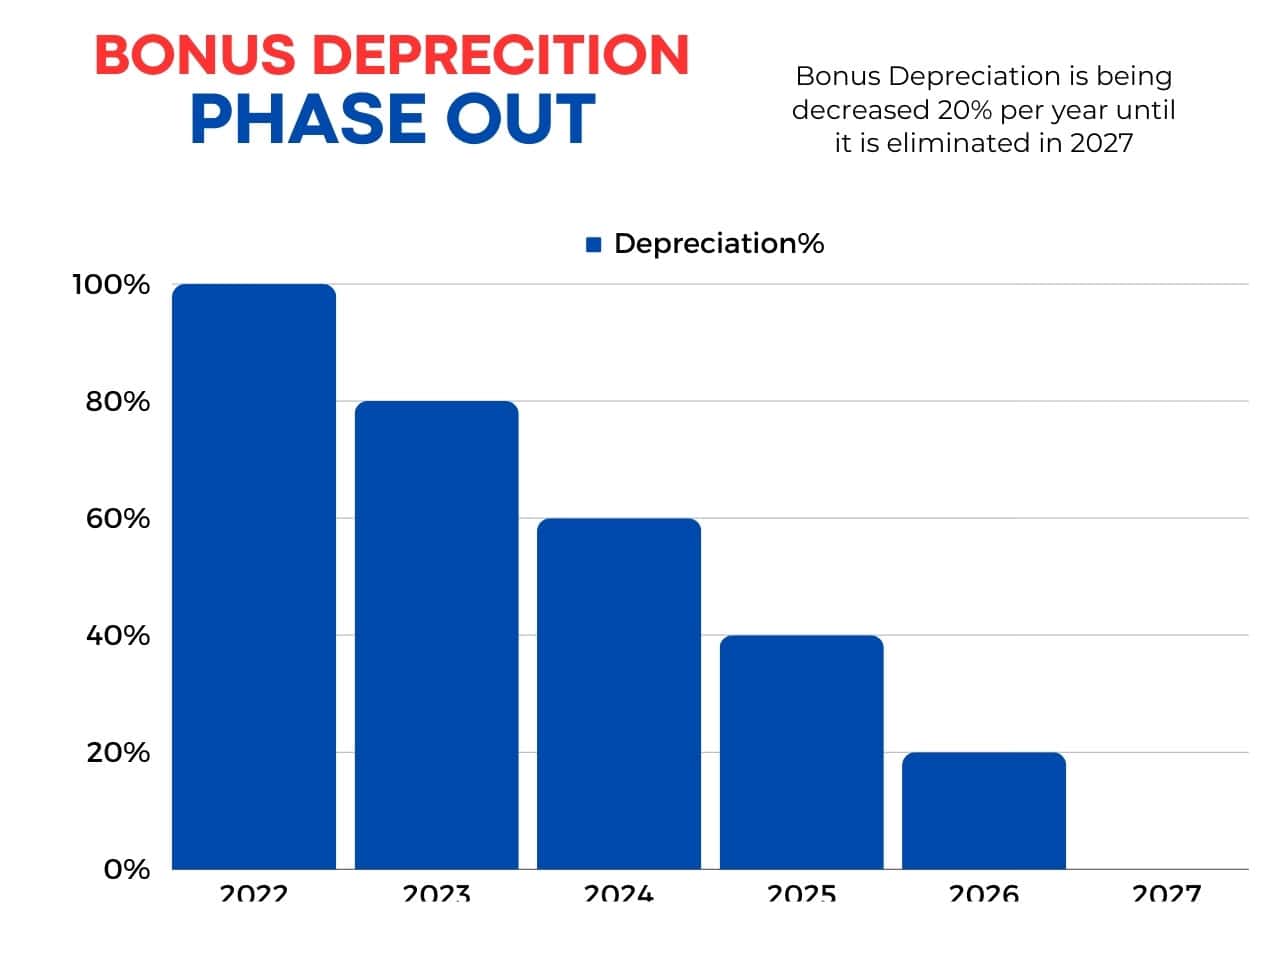 Bonus depreciation is decreasing 20% per year until it is eliminated in 2027